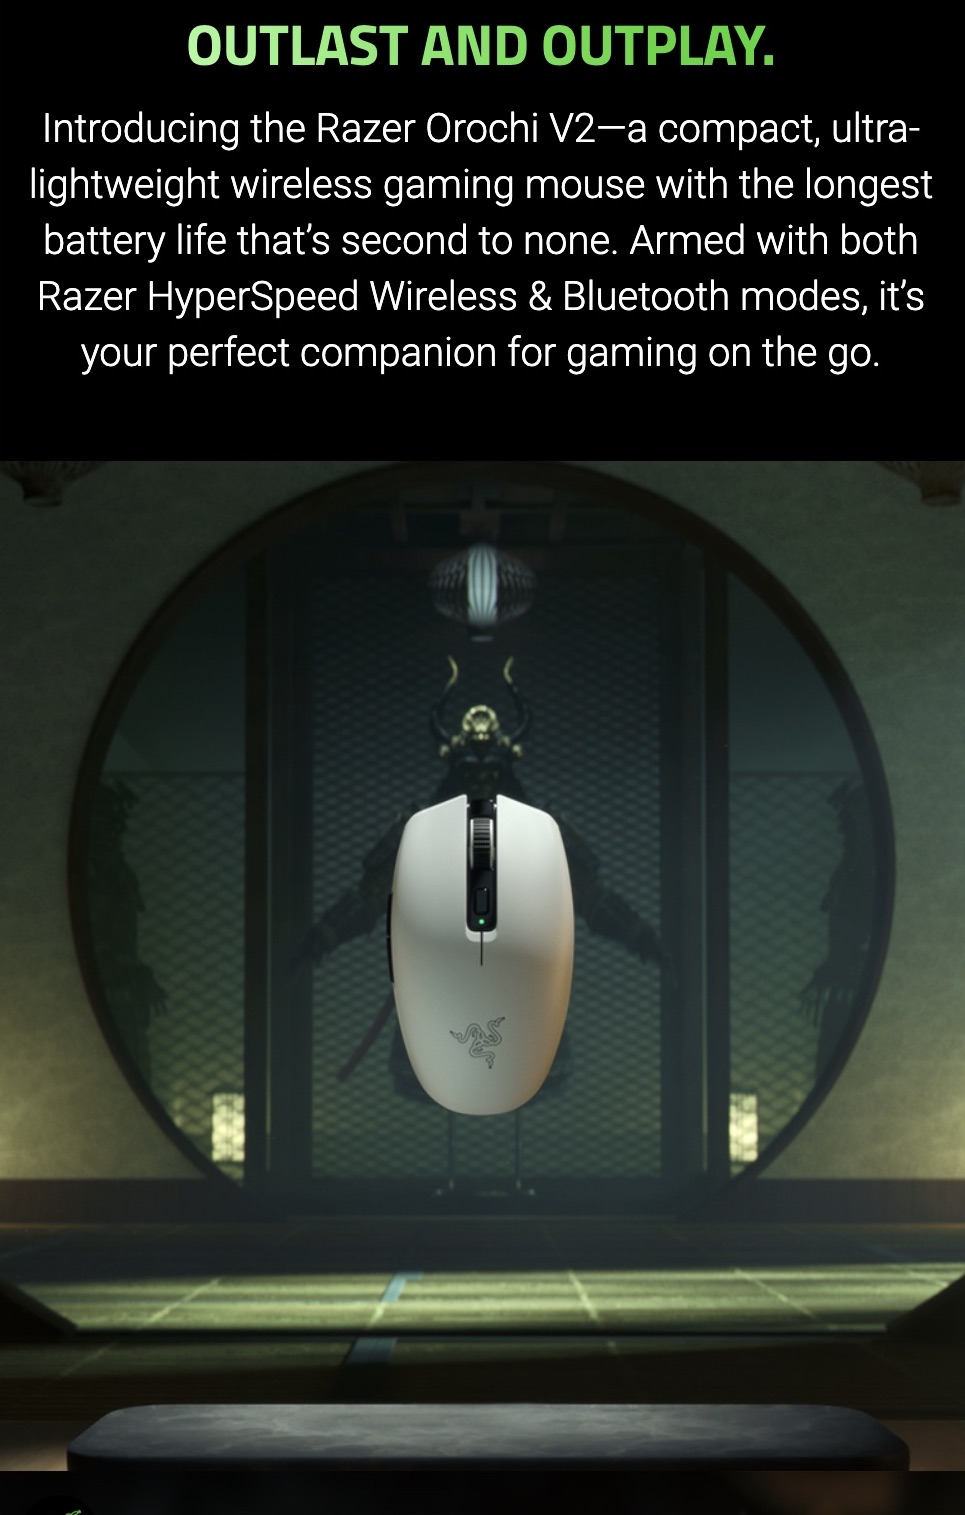 Razer-Orochi-V2-Ultra-Lightweight-Mobile-Wireless-Gaming-Mouse-White-Description-2